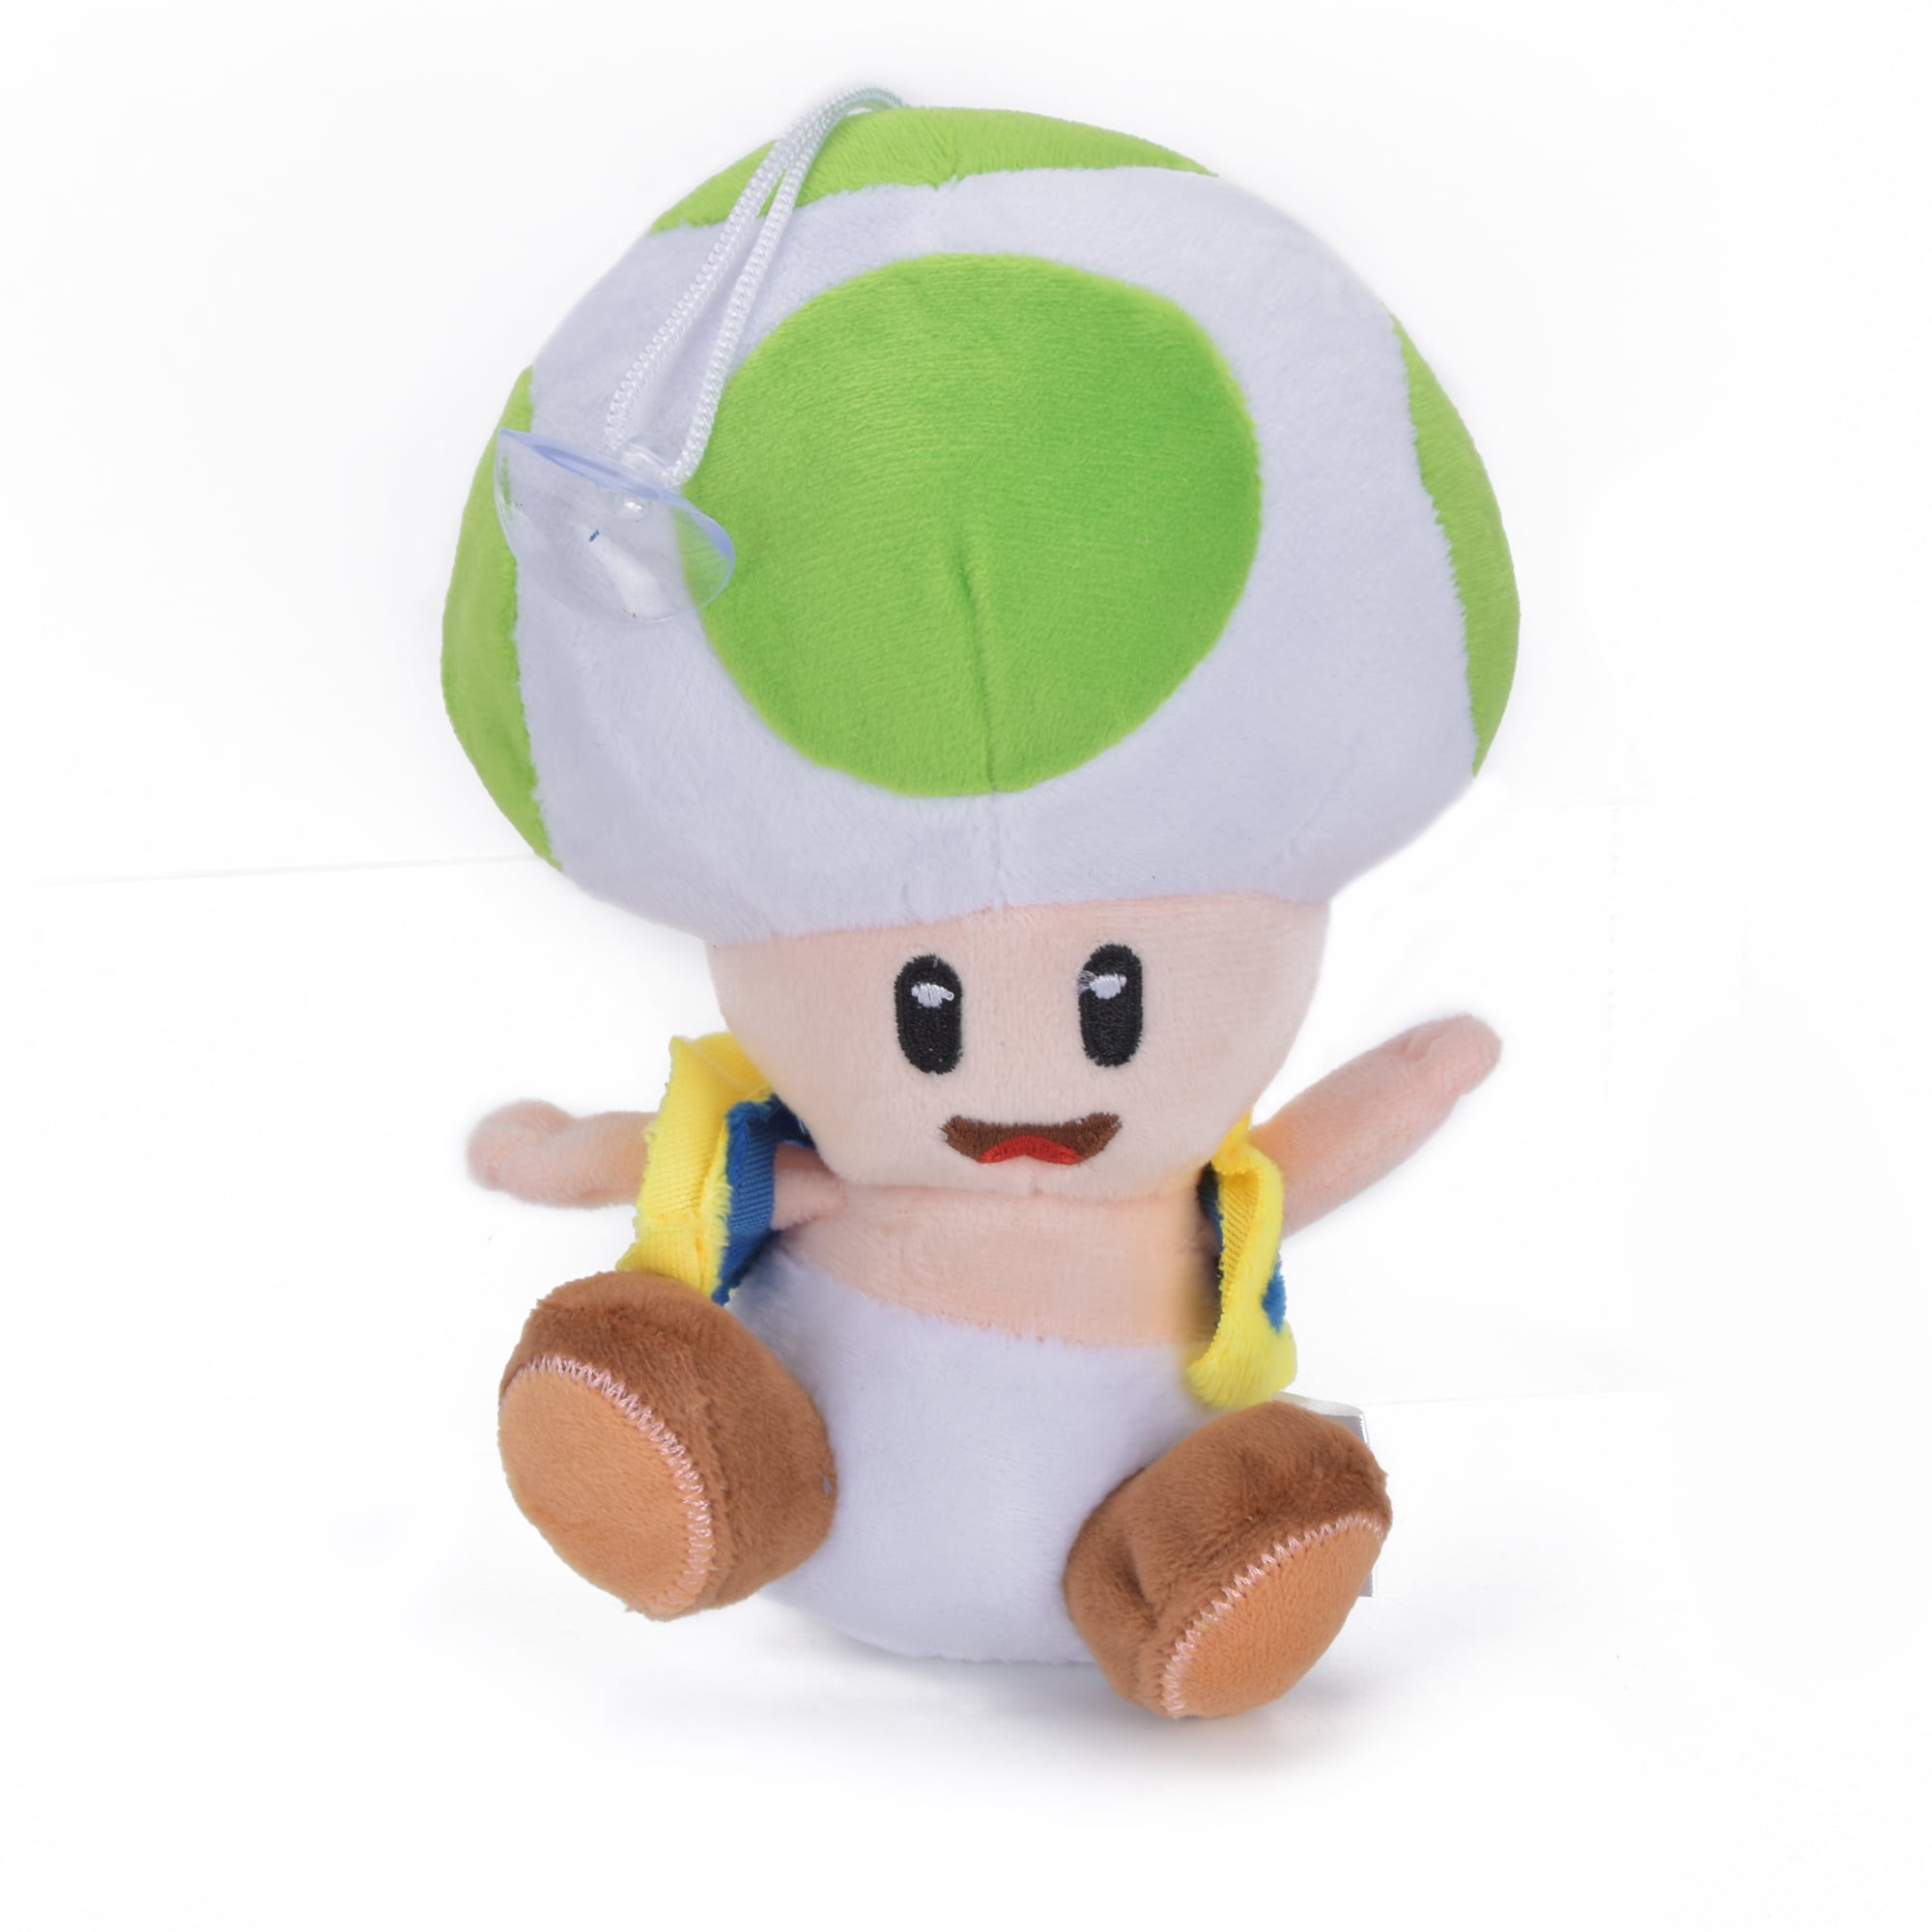 Plush 1-UP Green Mushroom Soft Toy Stuffed Animal Doll 5.5" Super Mario Bros 